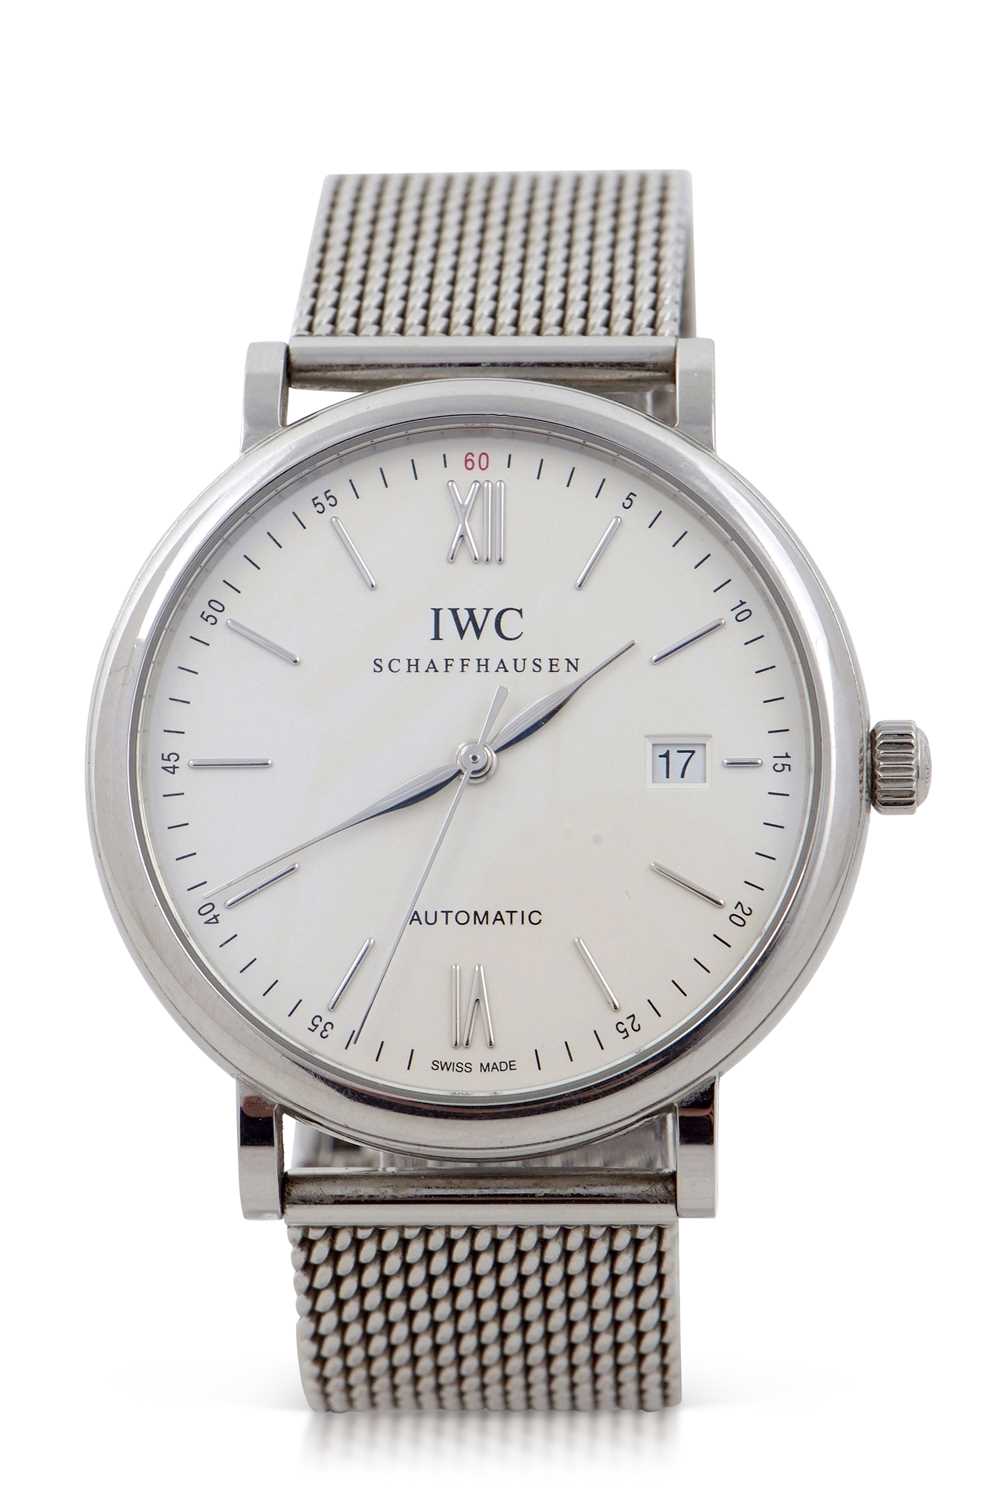 A IWC (International Watch Company) Portofino gents wristwatch, reference IW356505, box, card and